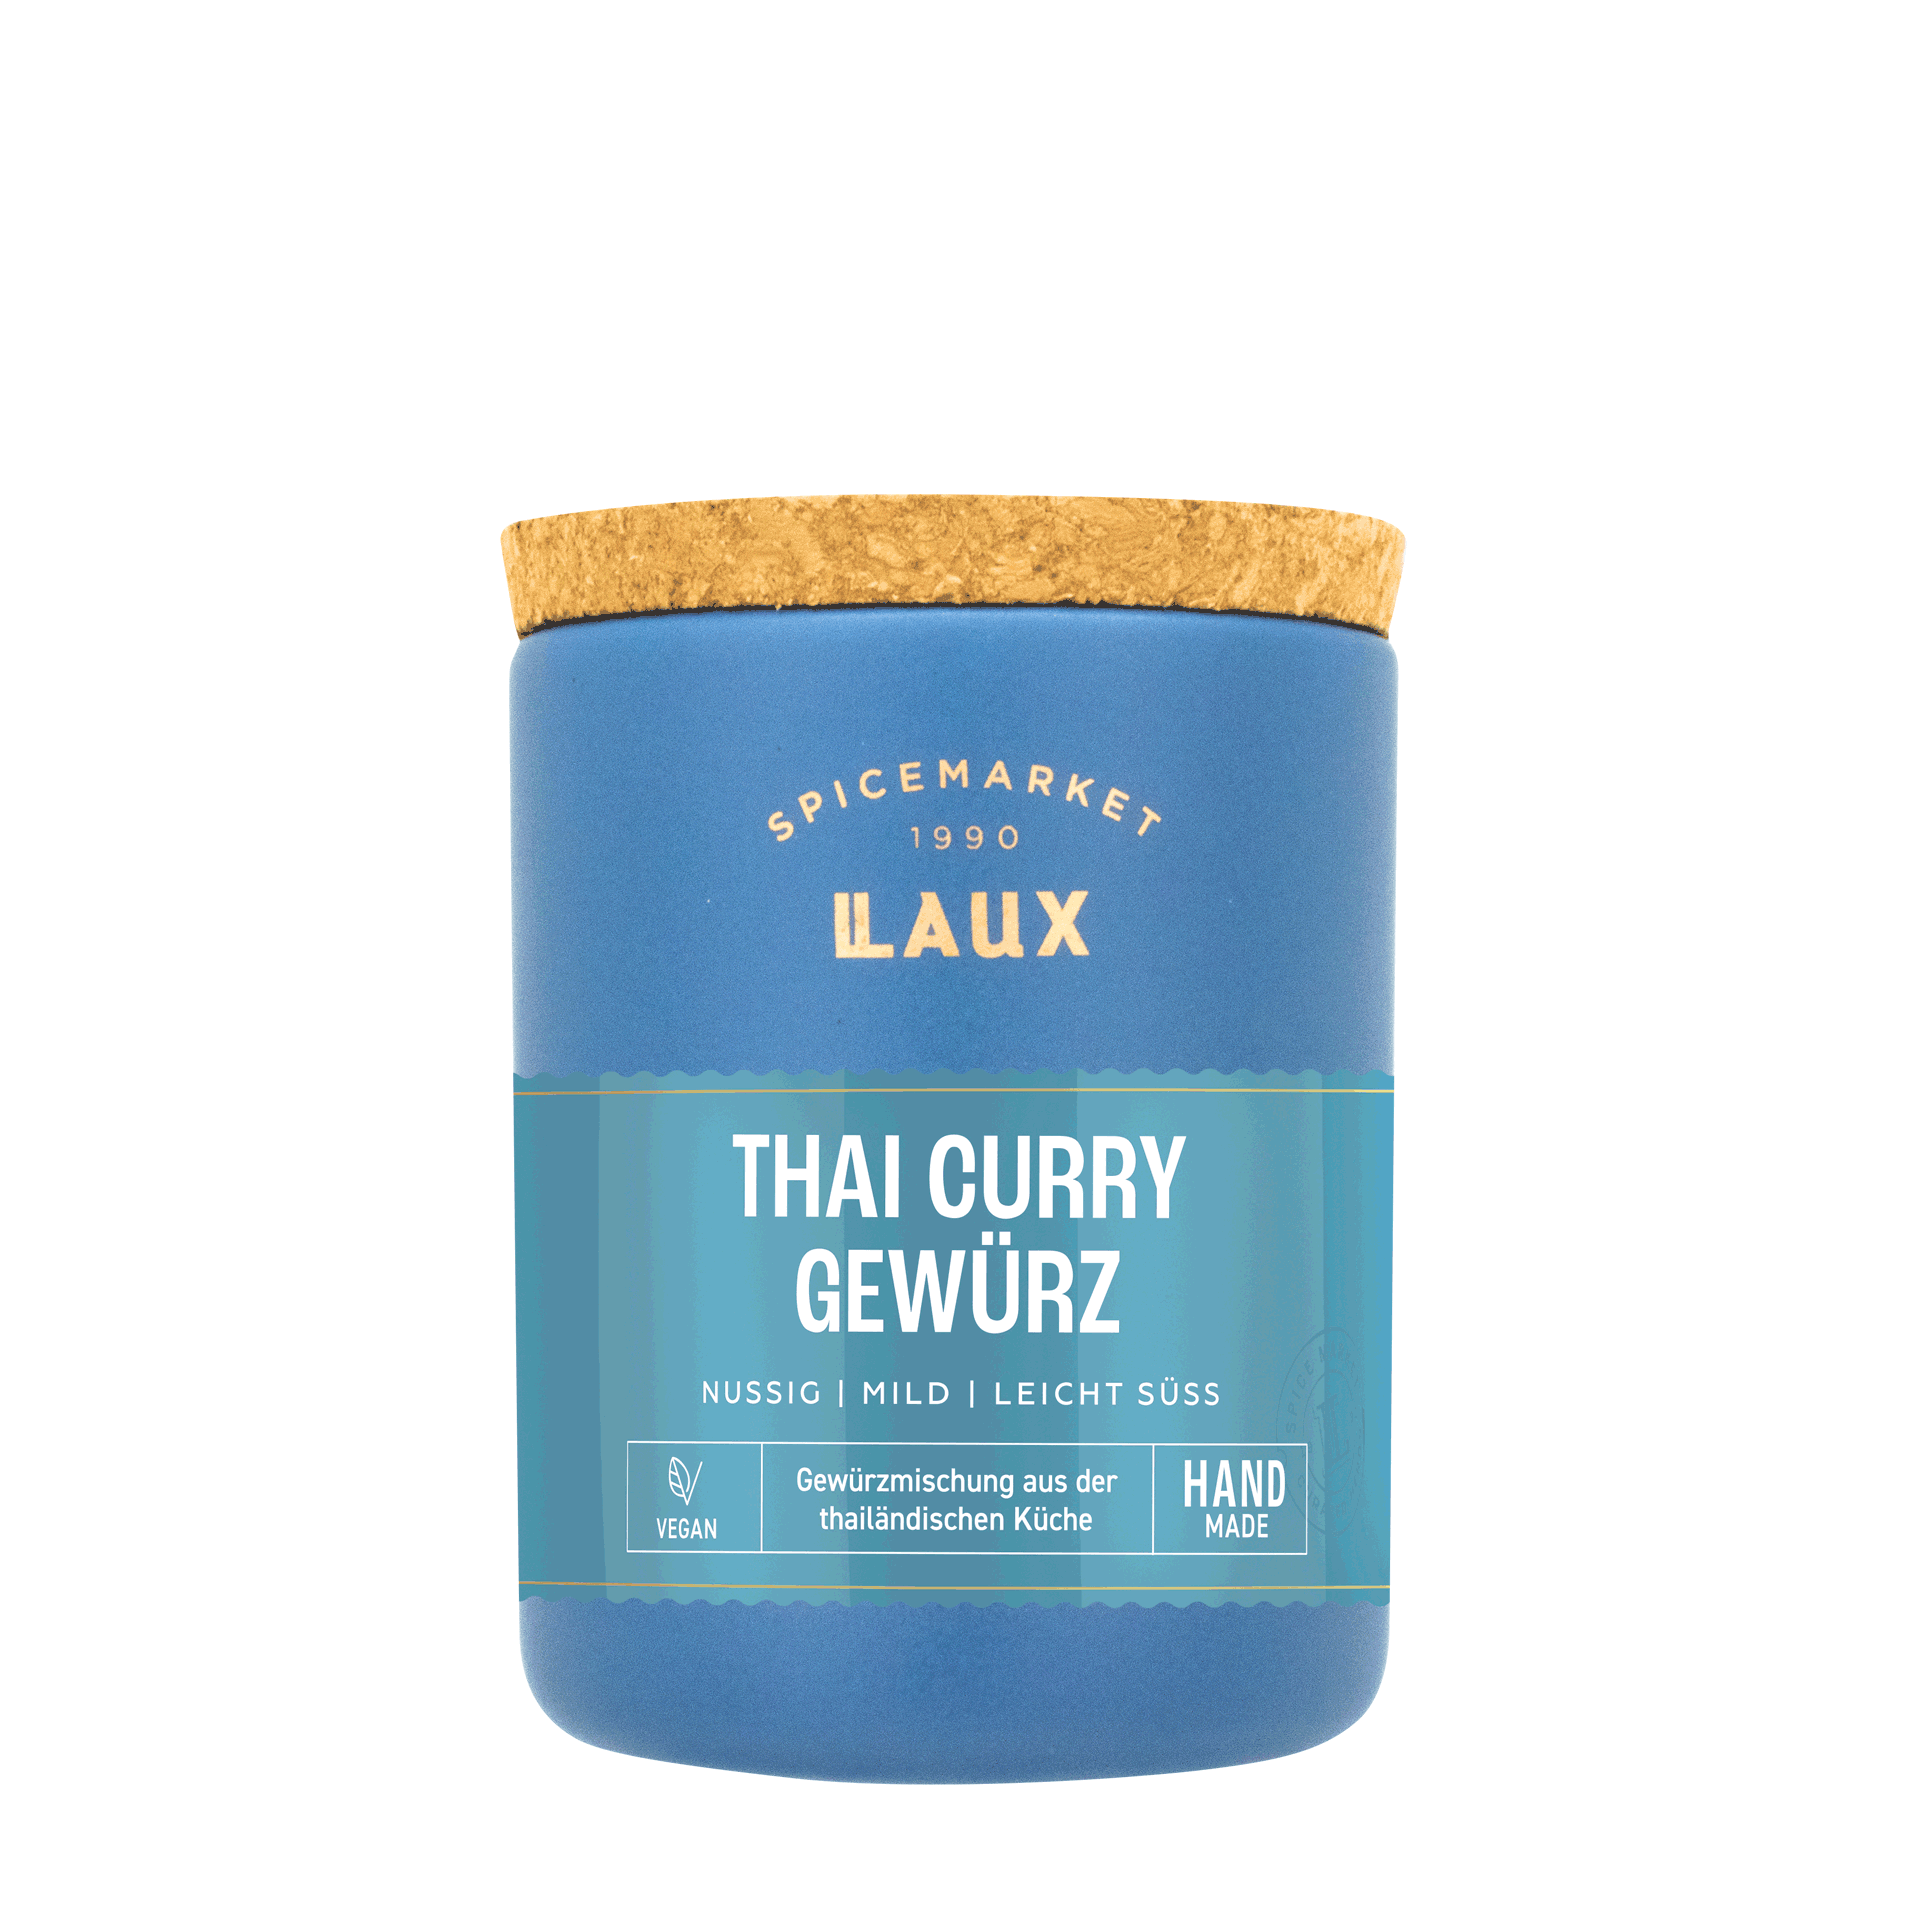 Thai Curry Gewürz im Keramiktopf